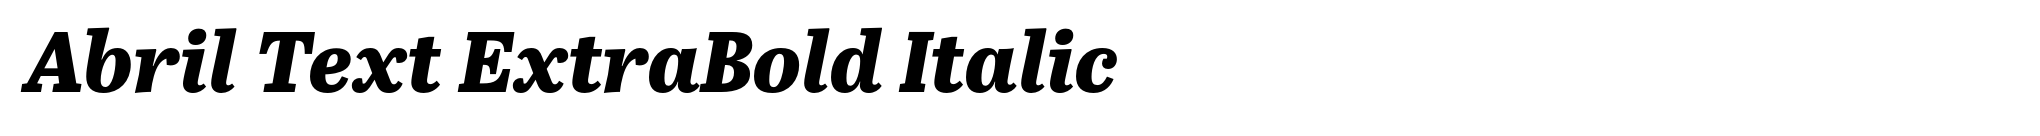 Abril Text ExtraBold Italic image